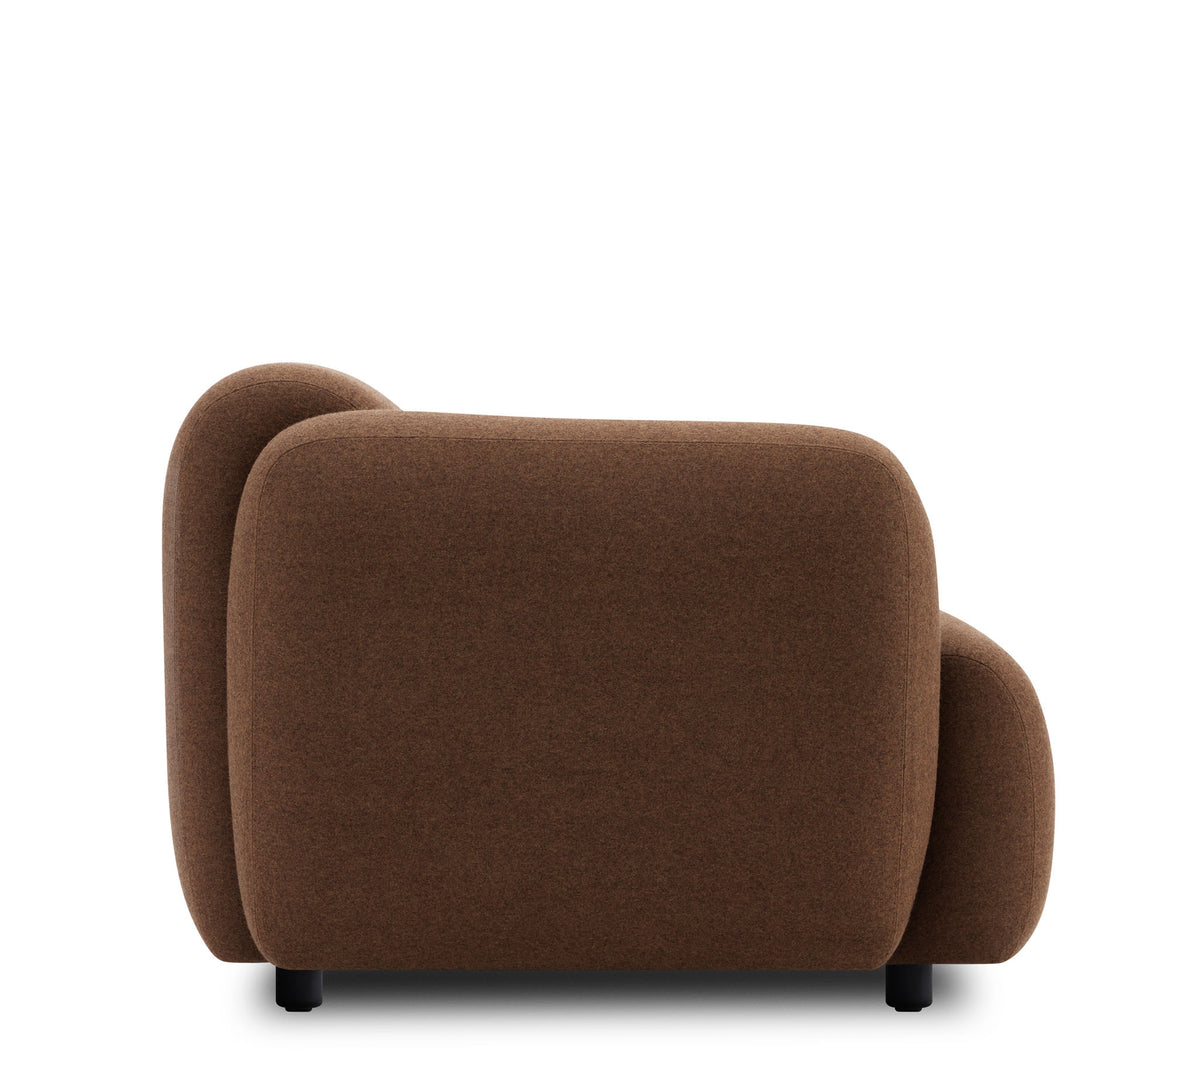 Swell Sofa 3er - KAQTU Design